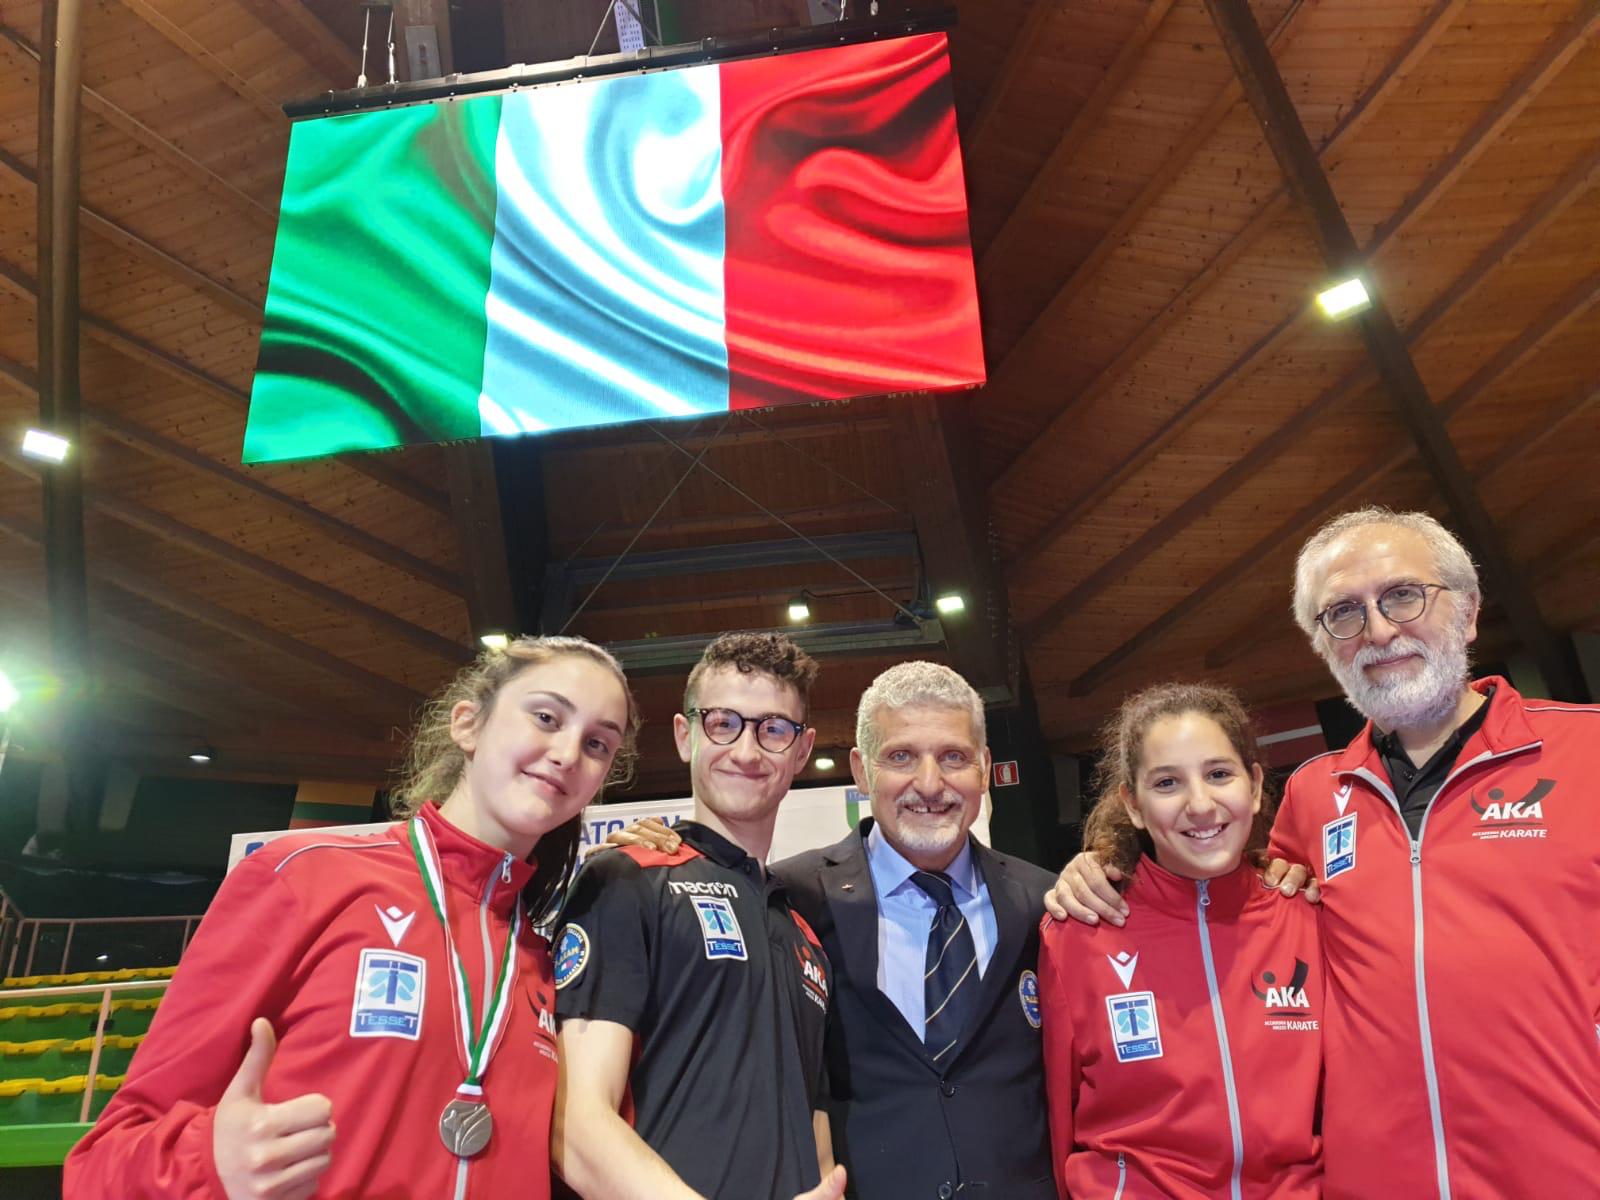 Campionato Italiano Karate Juniores, schierati 3 aretini